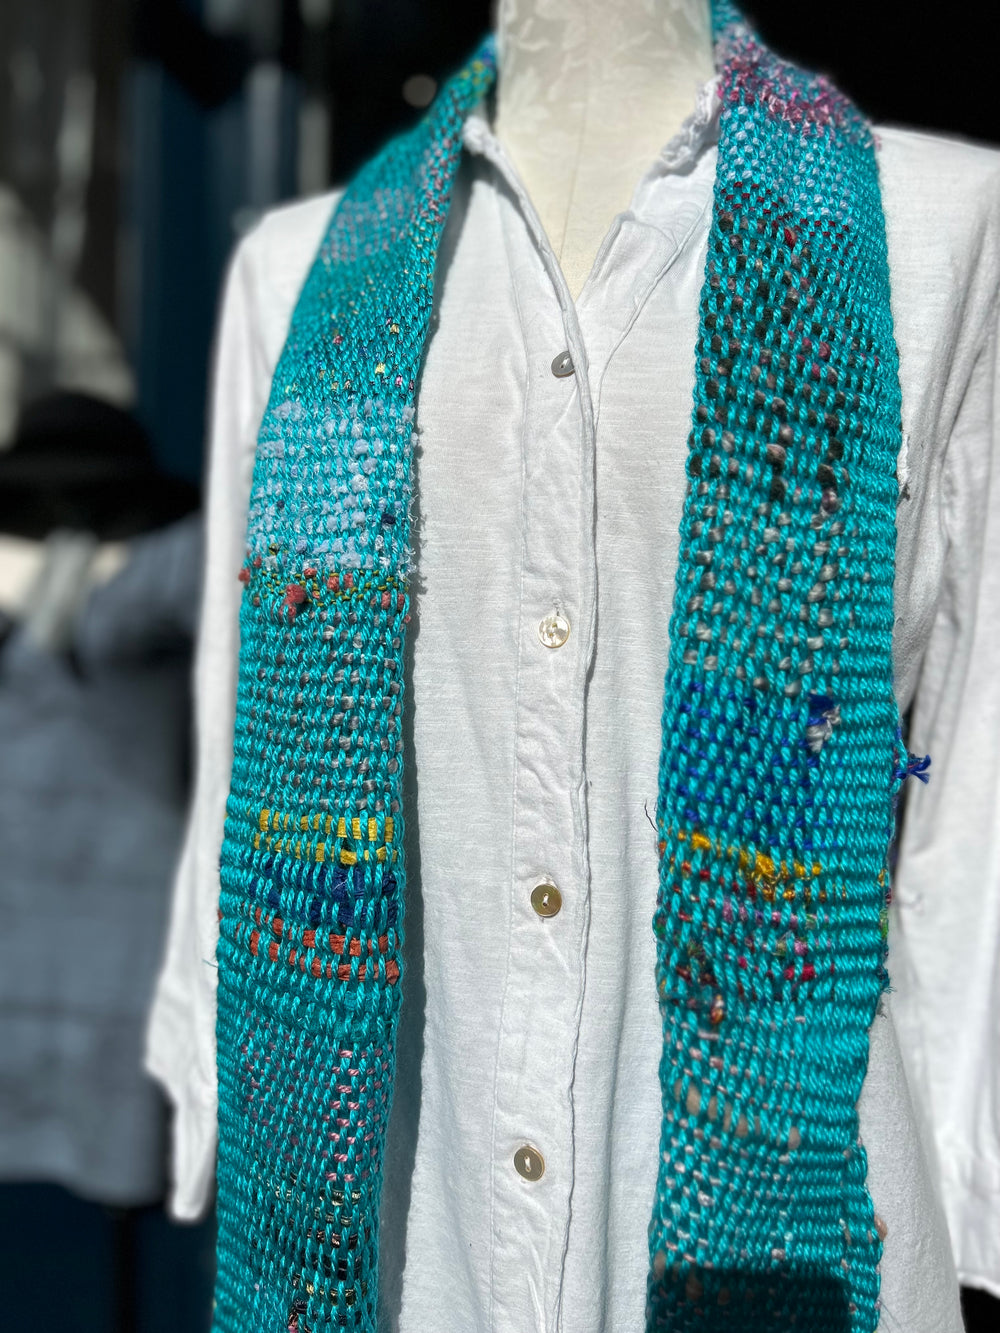 Natalie Reid scarf, narrow hand-woven fiber art